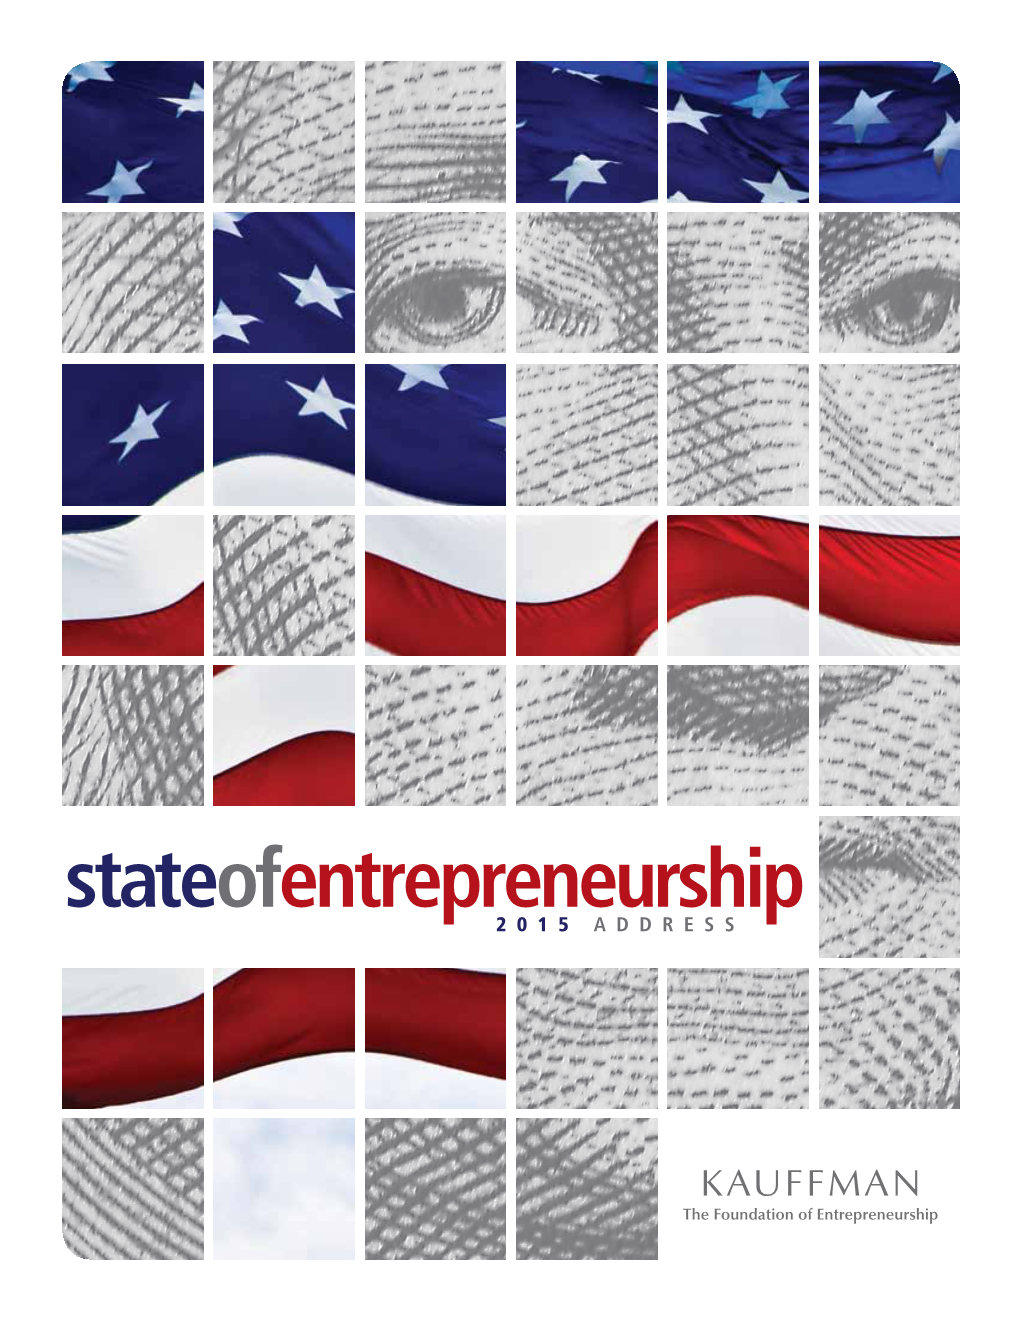 Stateofentrepreneurship 2015 ADDRESS ©2015 by the Ewing Marion Kauffman Foundation